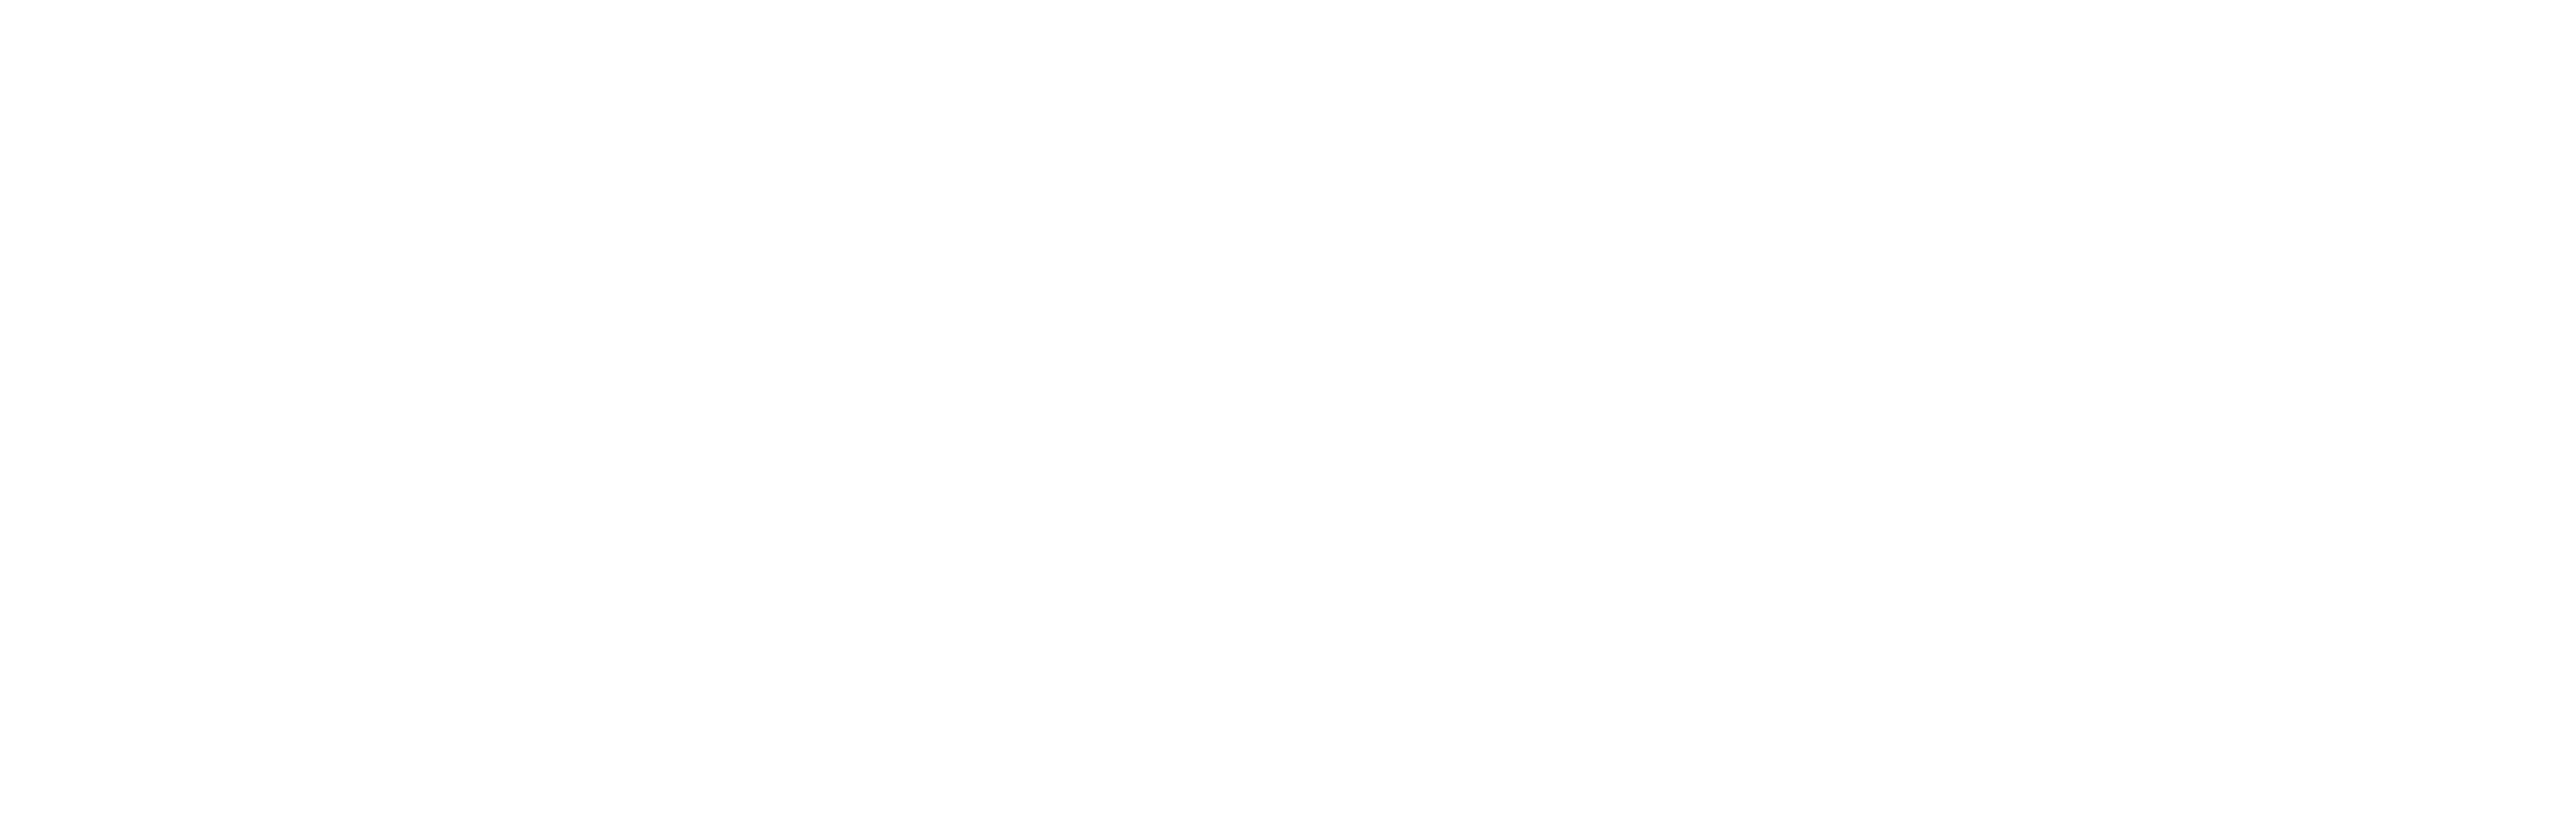 7th Edition Future of Finance Summit & Awards 2022